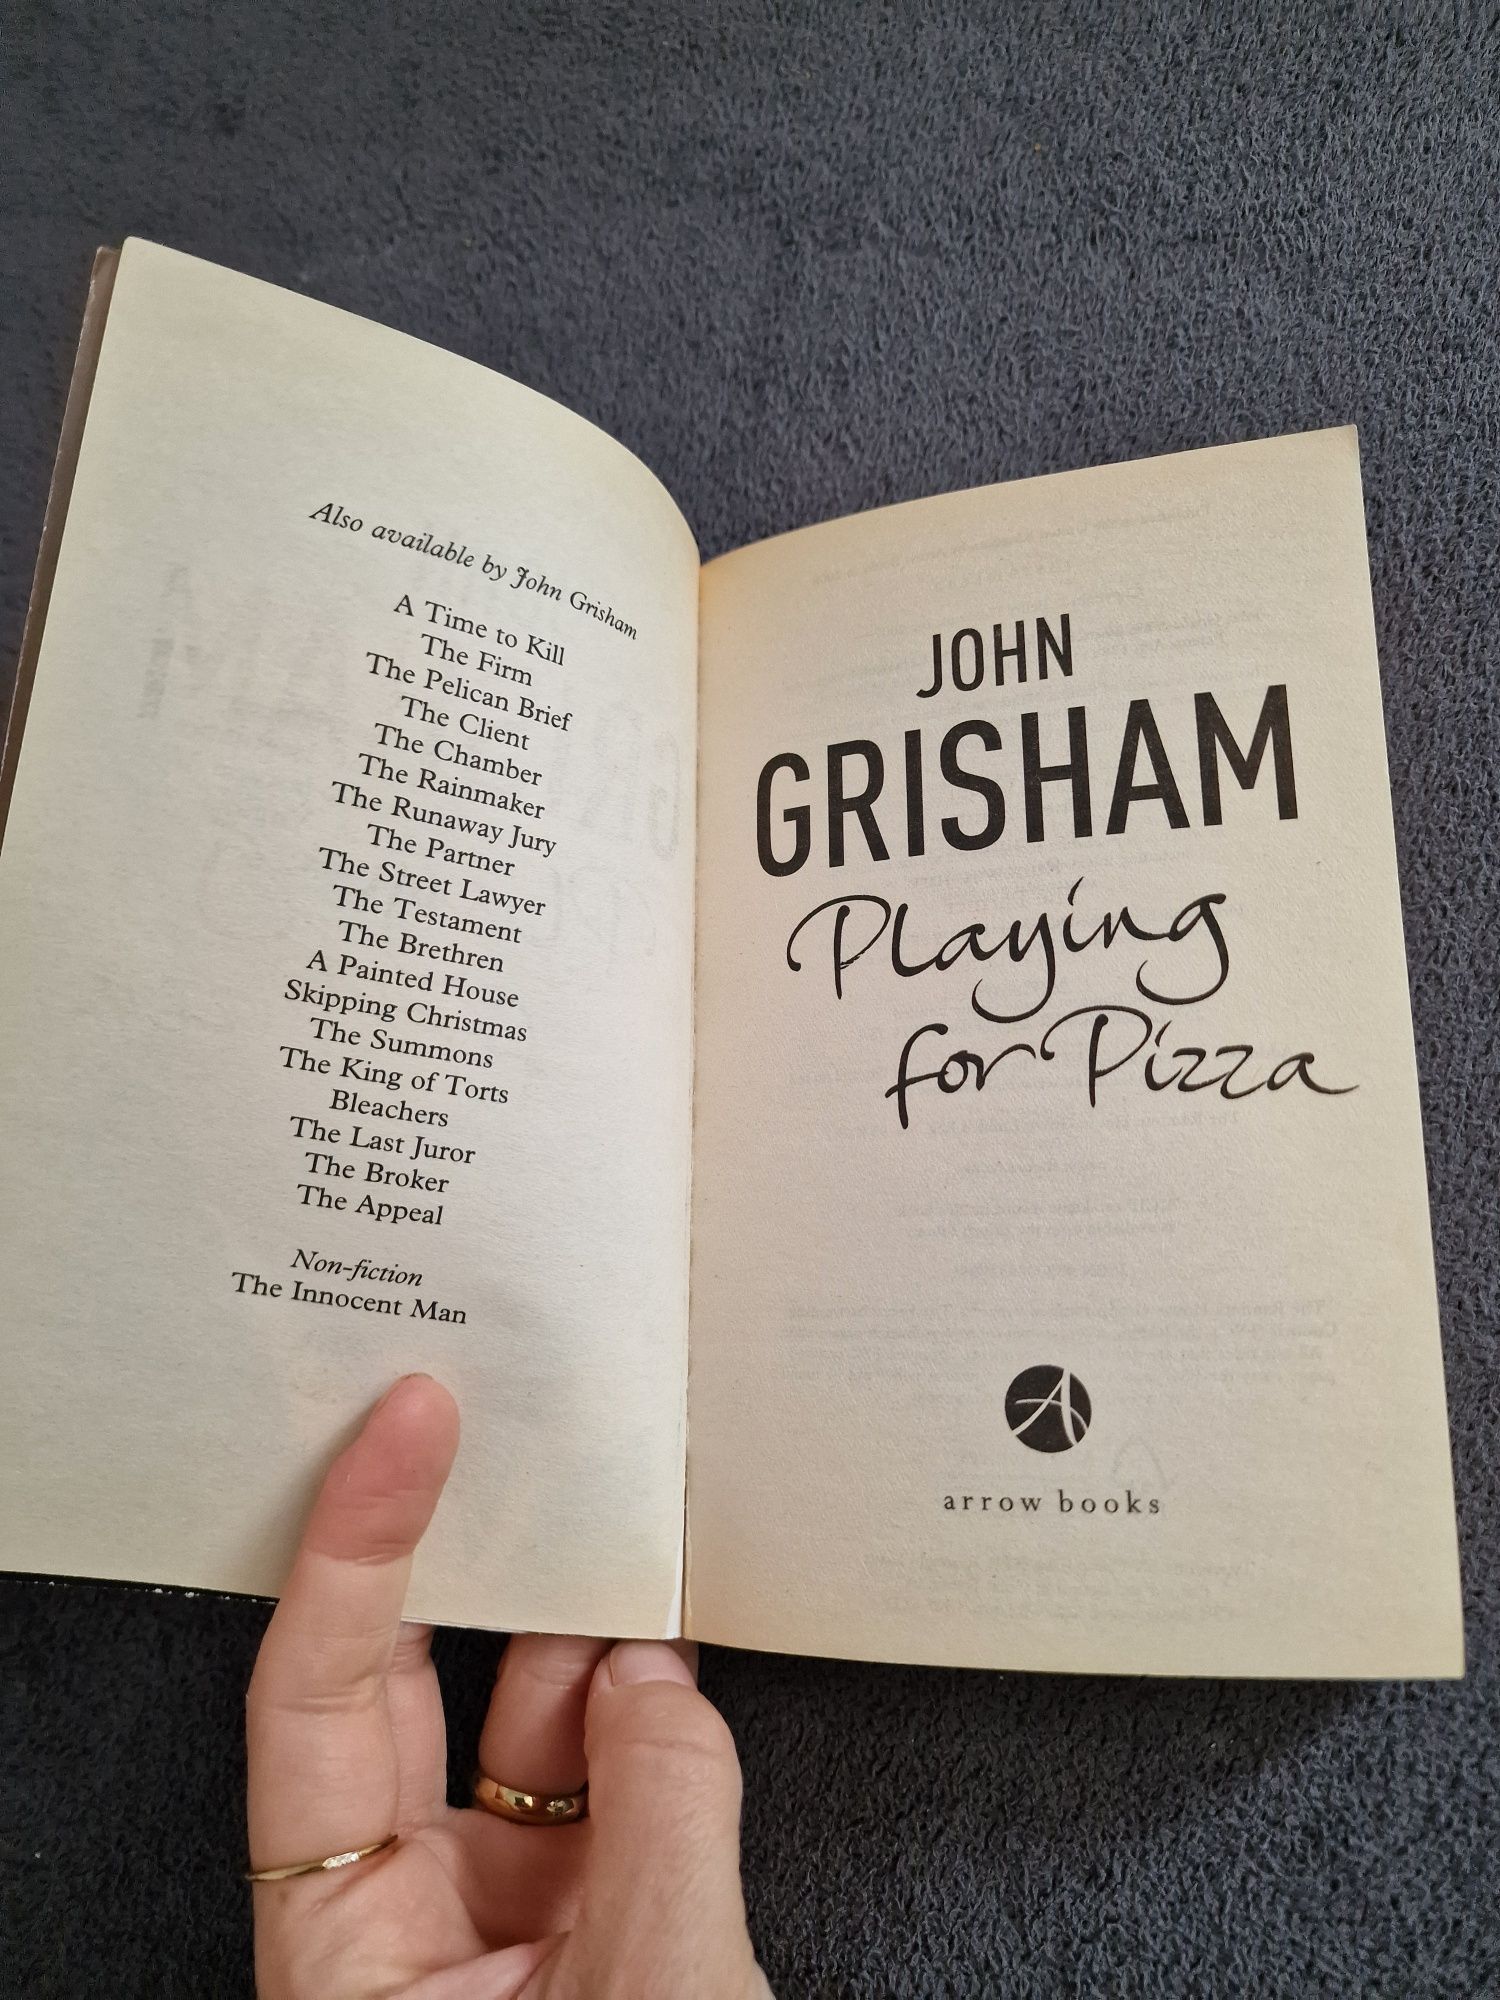 Playing for pizza - John Grisham